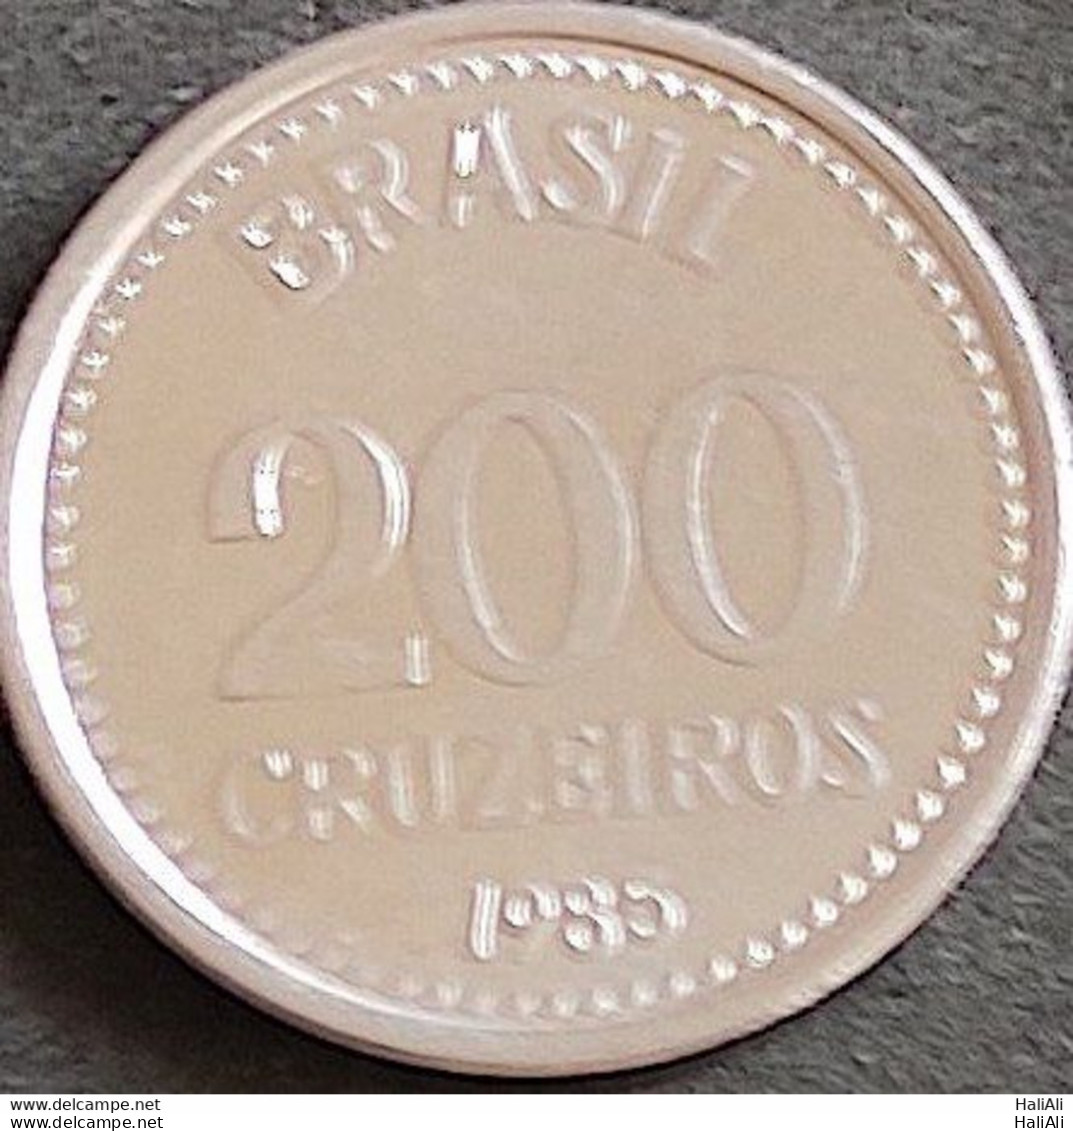 Coin Brazil Moeda Brasil 1985 200 Cruzeiros 1 - Brazil